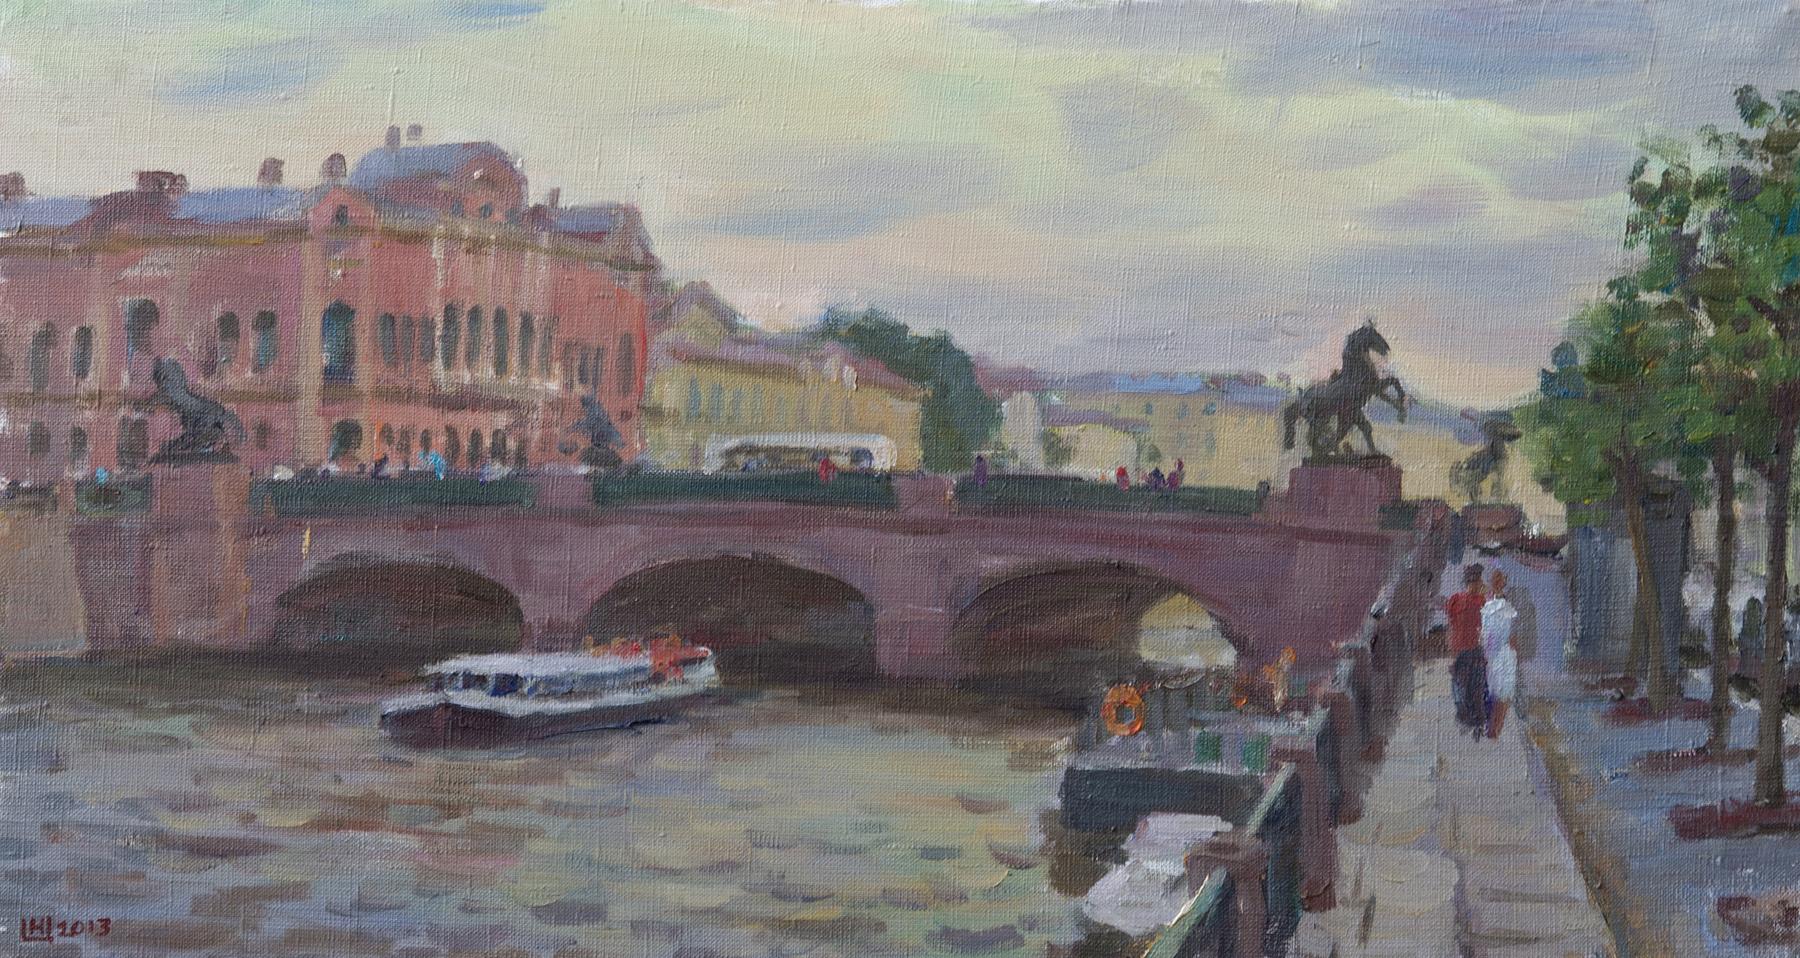 Anychkov桥. Original modern art painting